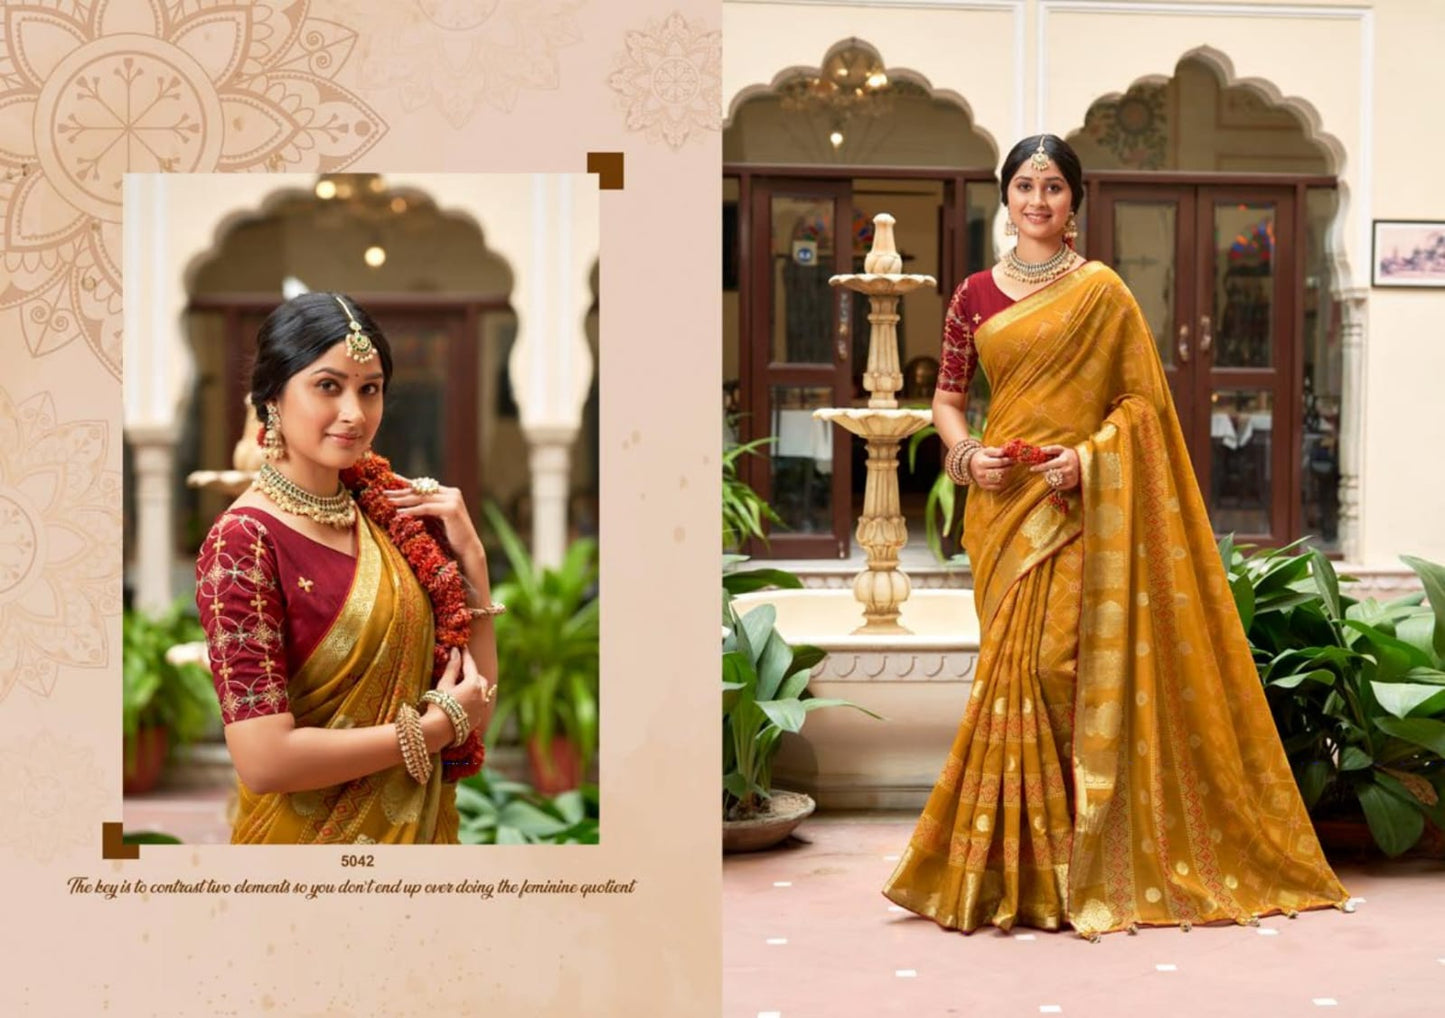 Shivali 5D Designer Silk Jacquard Sarees